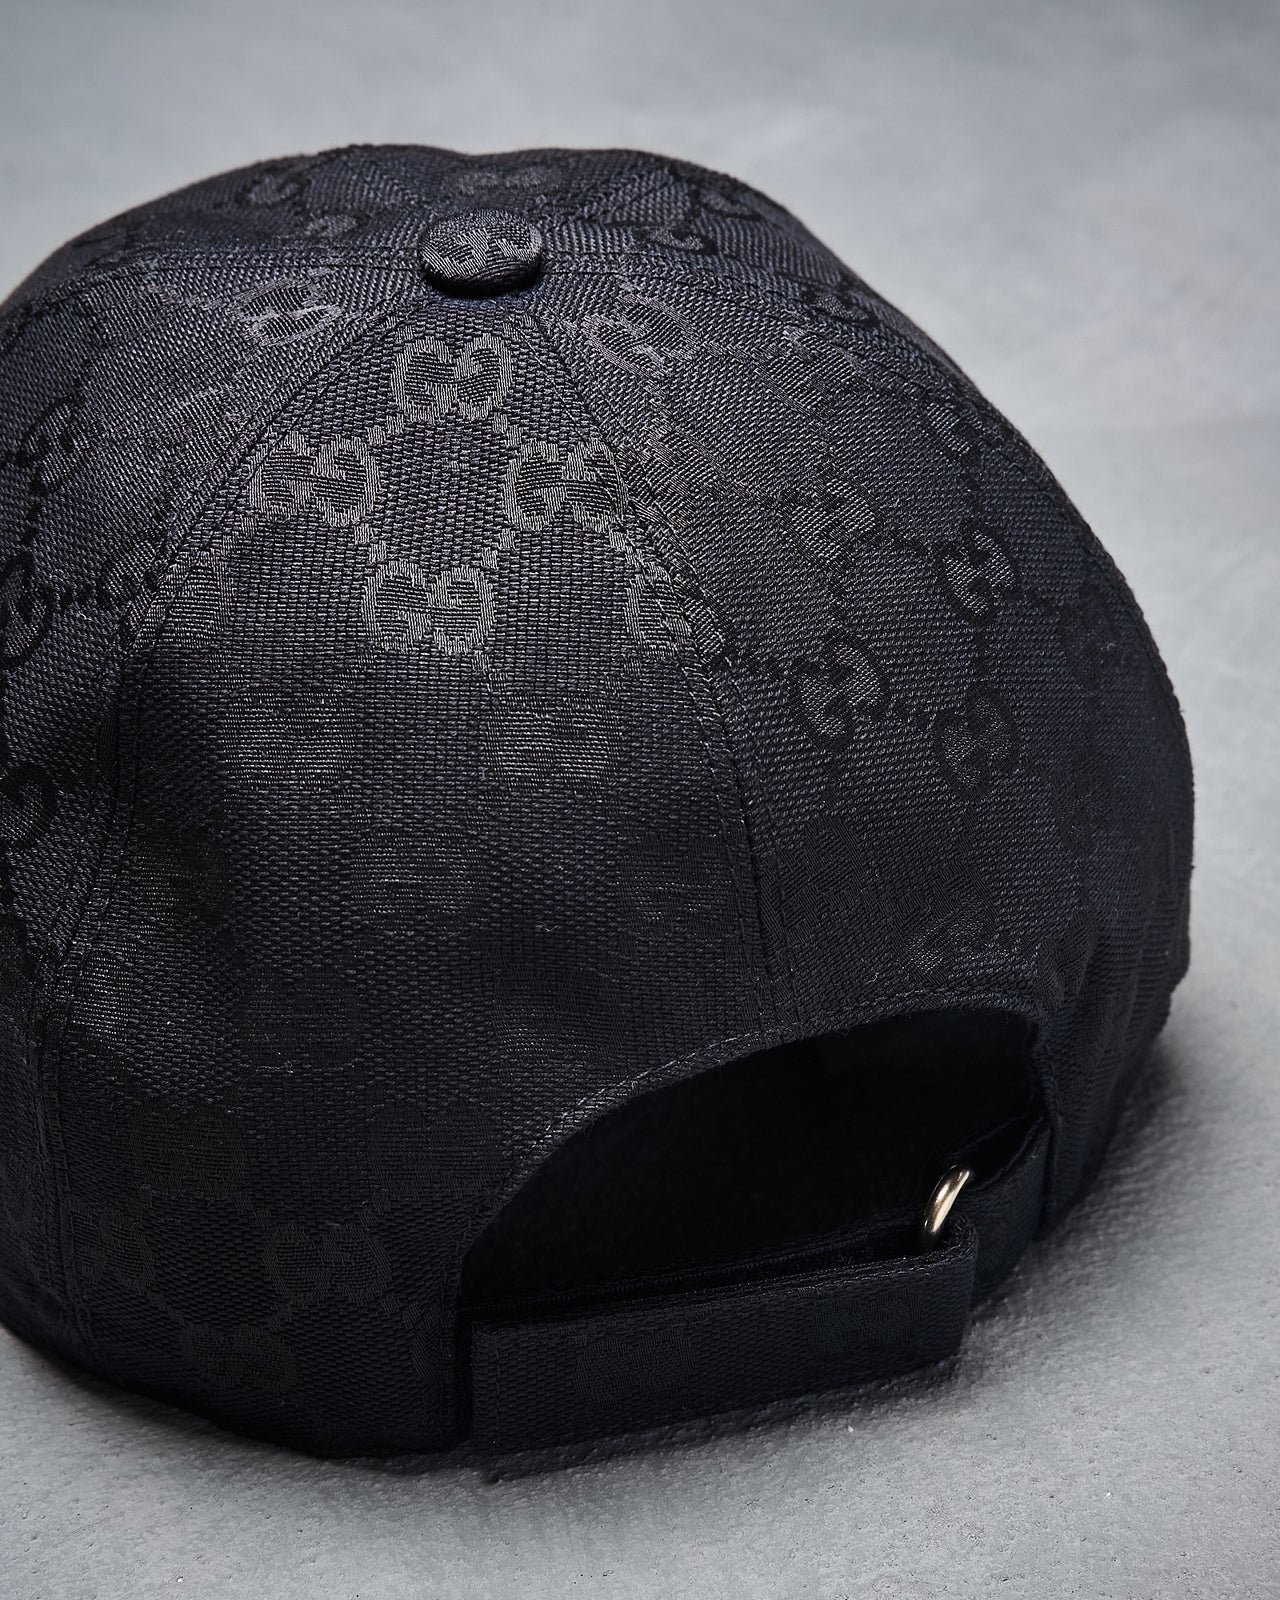 Gucci Interlocking GG leather patch cap